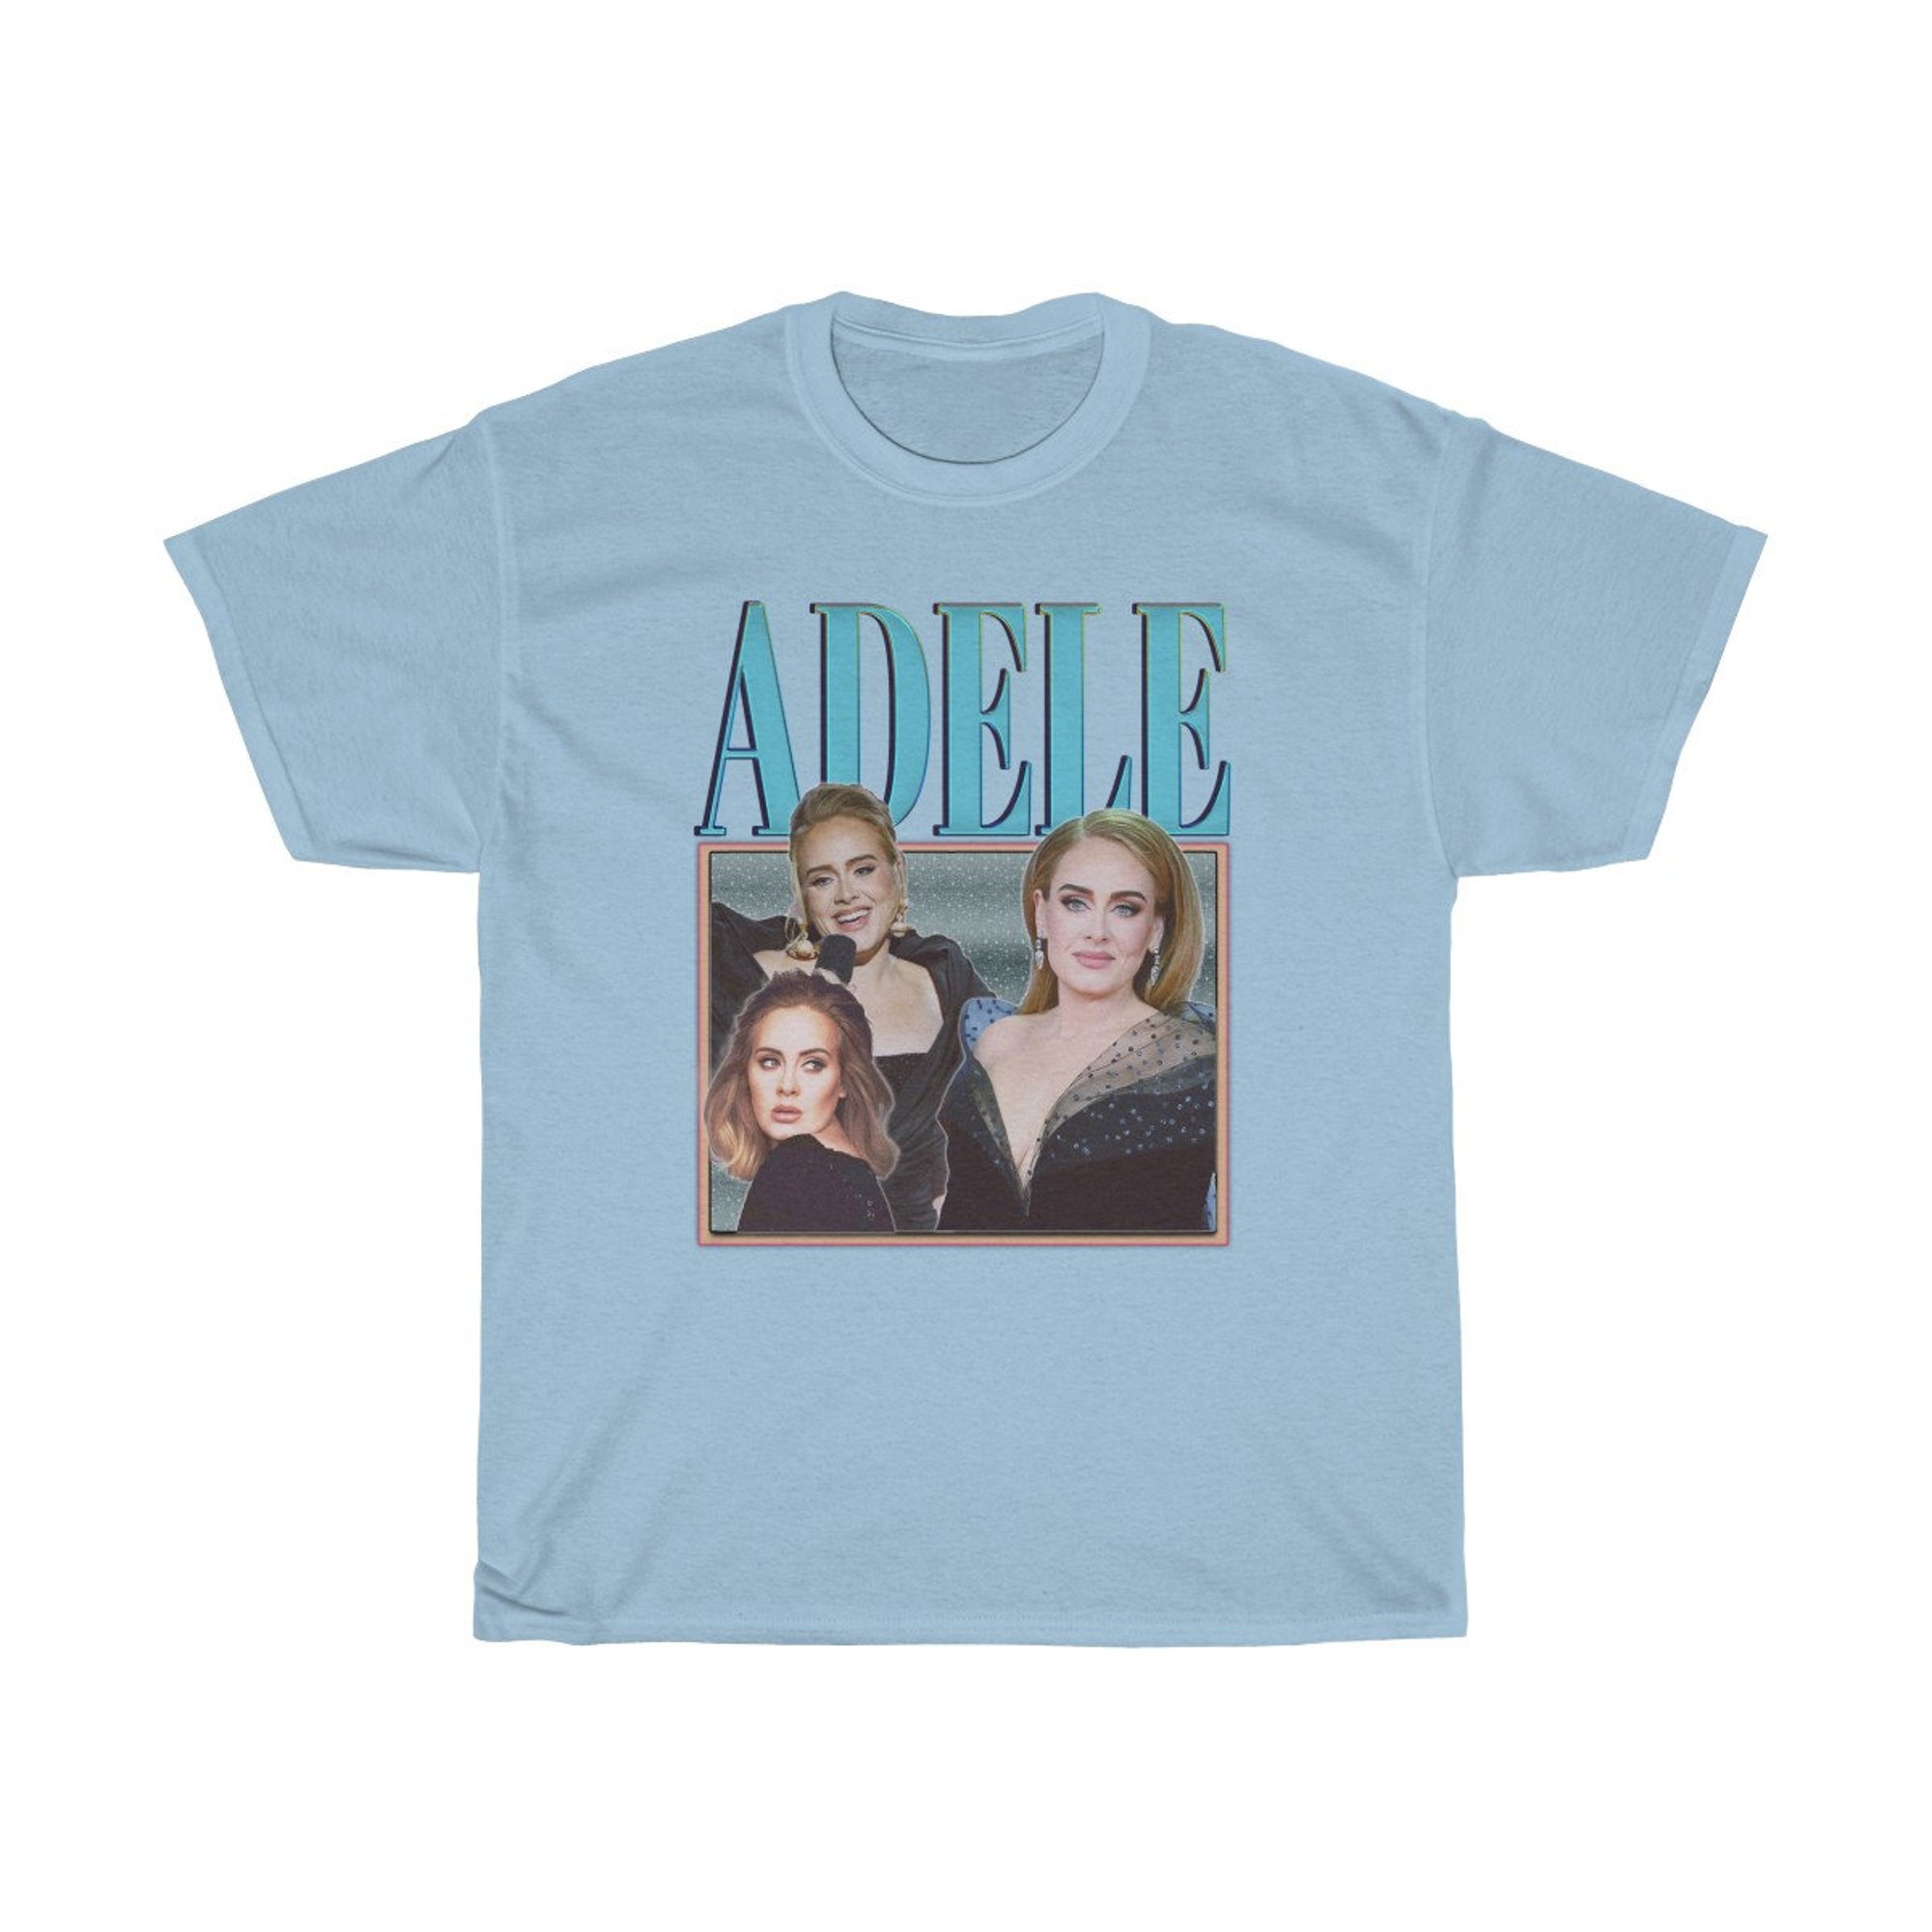 Discover Adele Retro Shirt, Adele Shirt, Adele Easy On Me Vintage Shirt, Gift for fan, Tour Merch Shirt